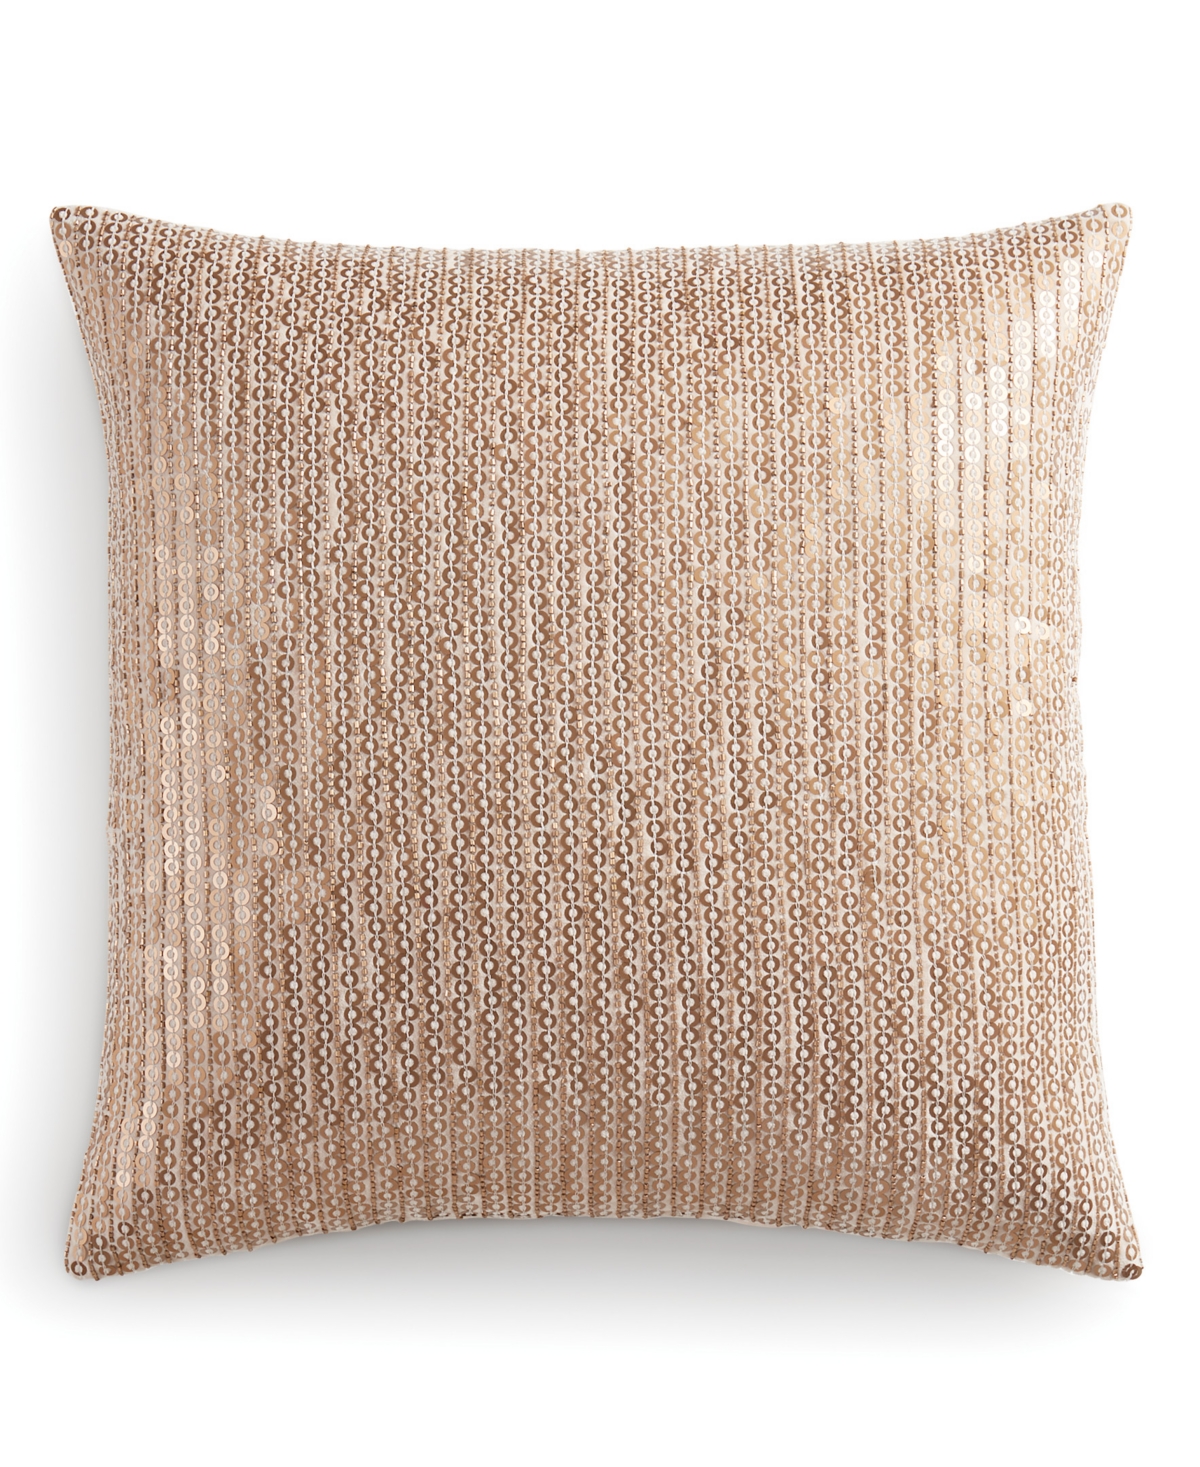 Donna Karan Copper Sequin Decorative Pillow, 20 X 20